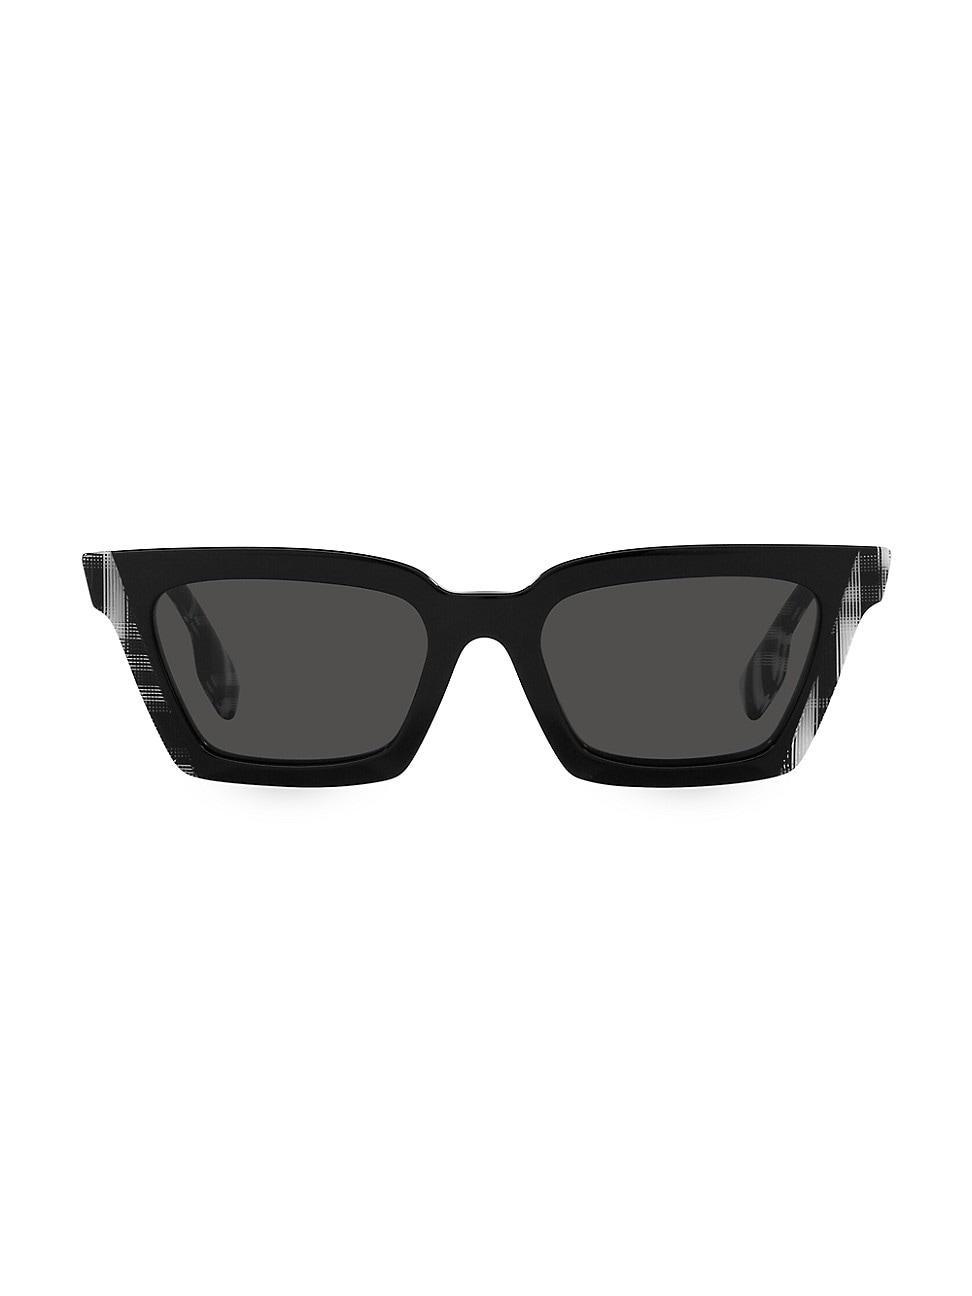 burberry Briar 52mm Square Sunglasses Product Image